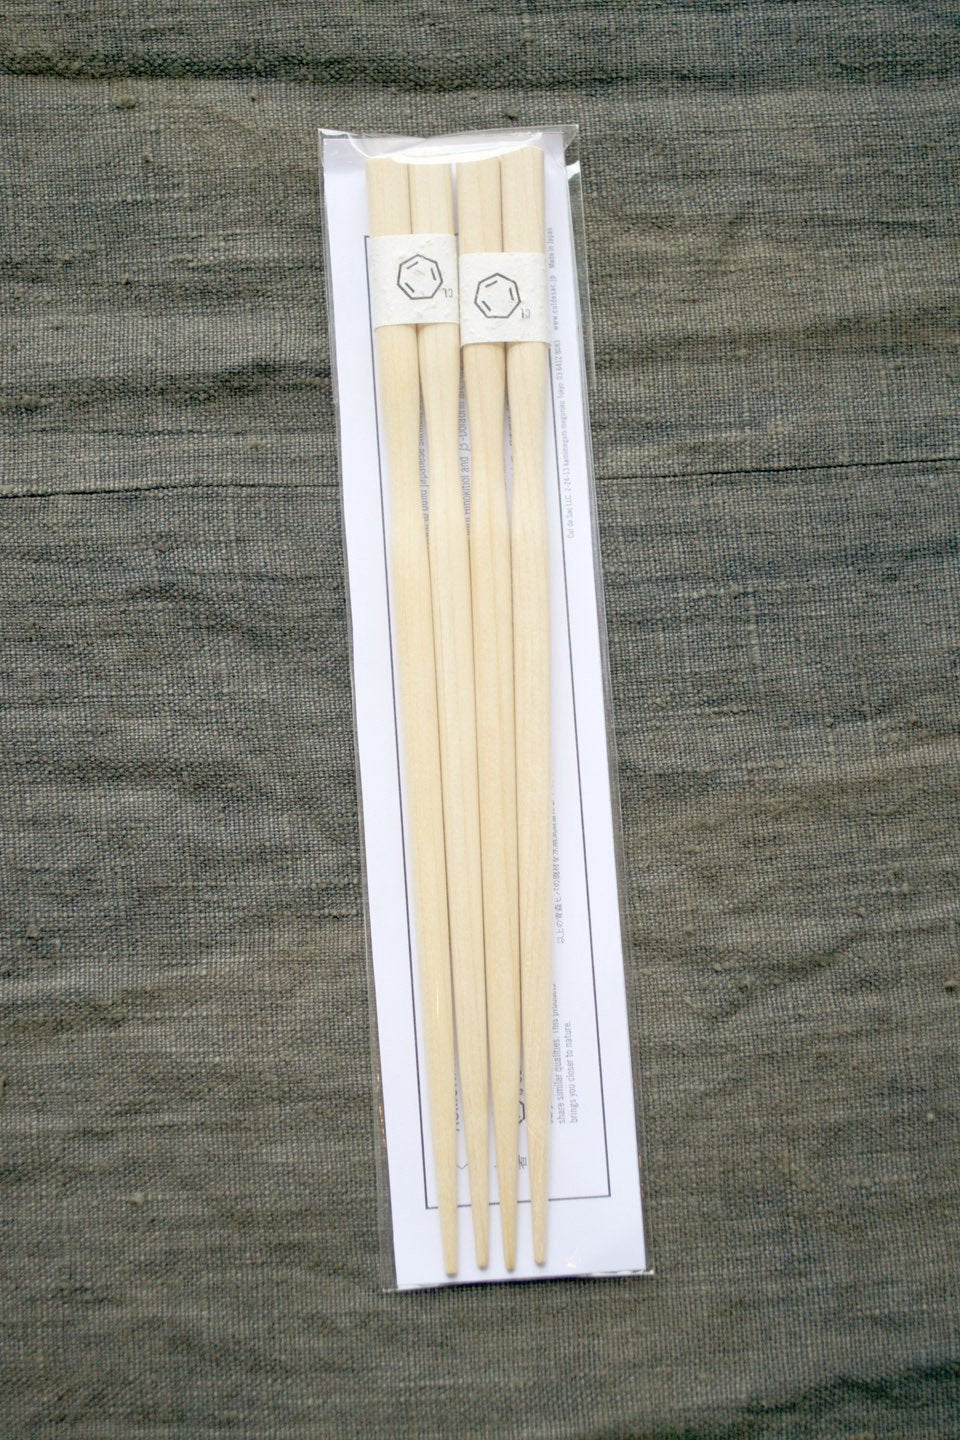 Hiba Chopsticks